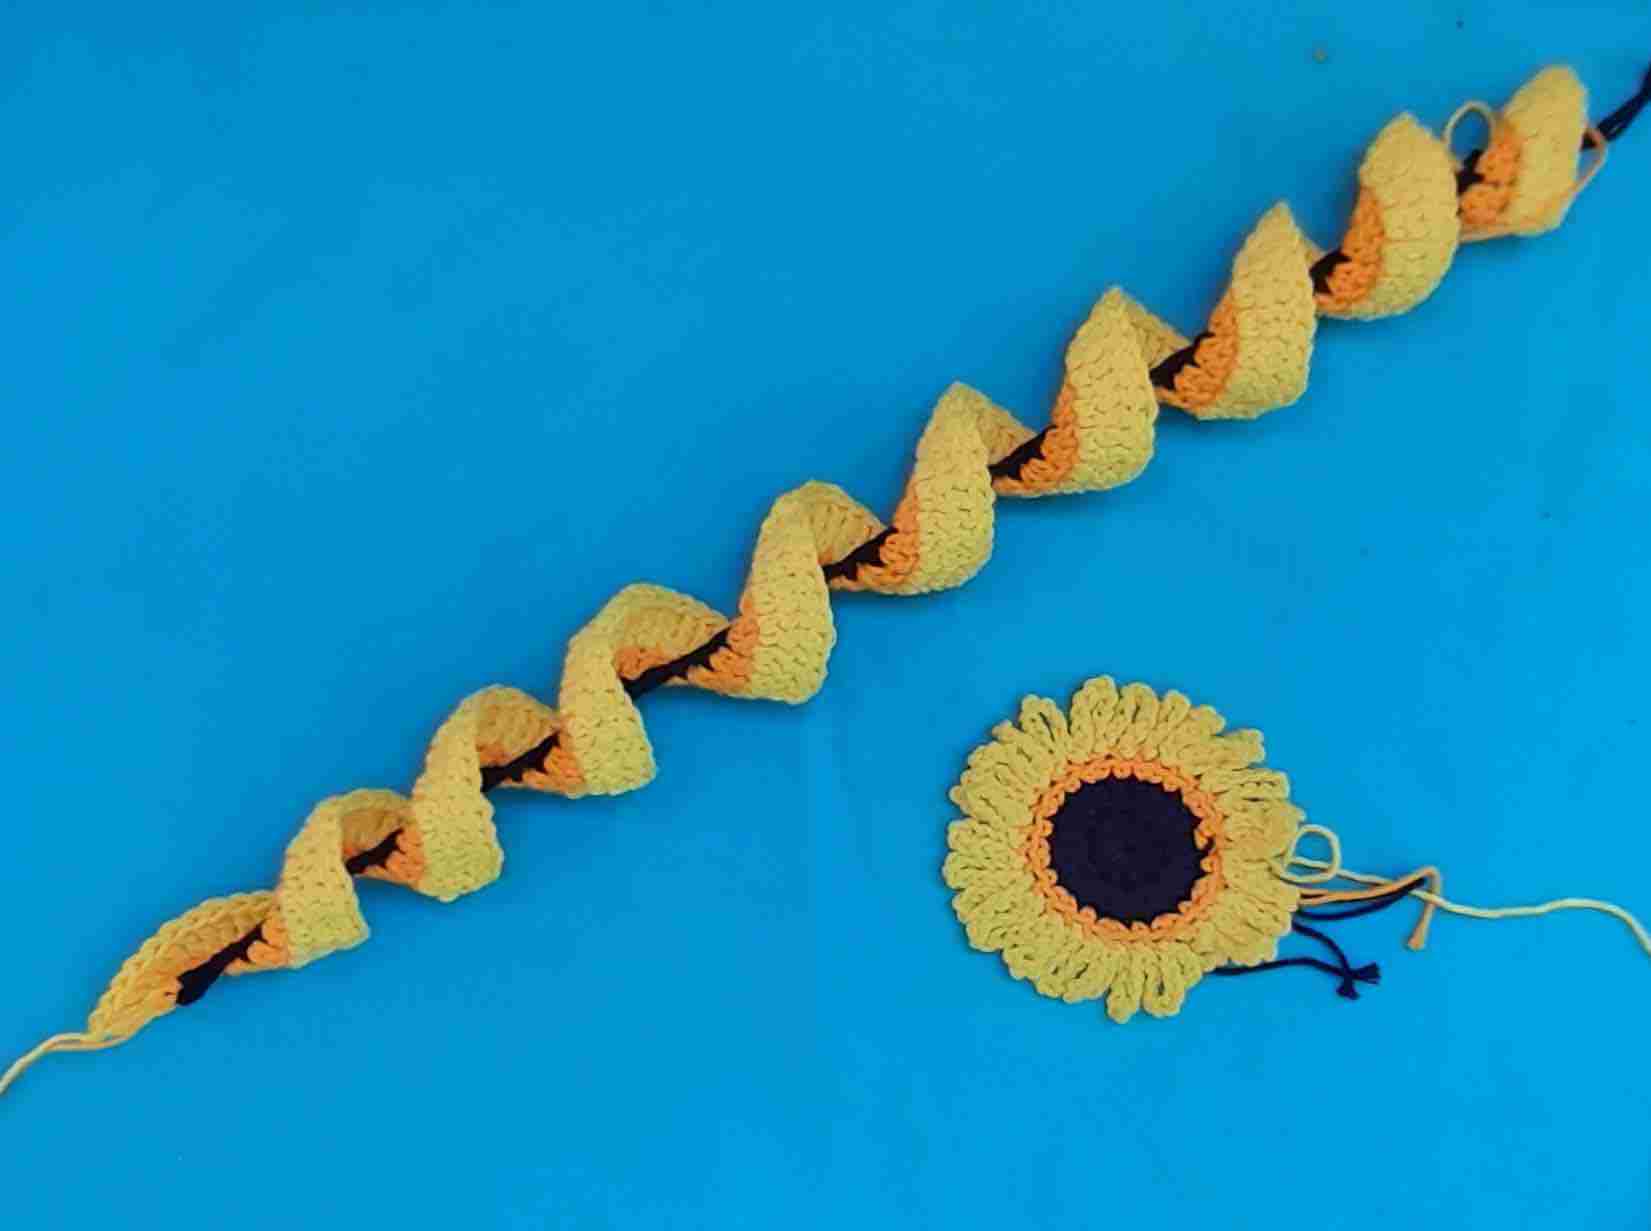 Sunflower crochet pattern tutorial with sunflower applique